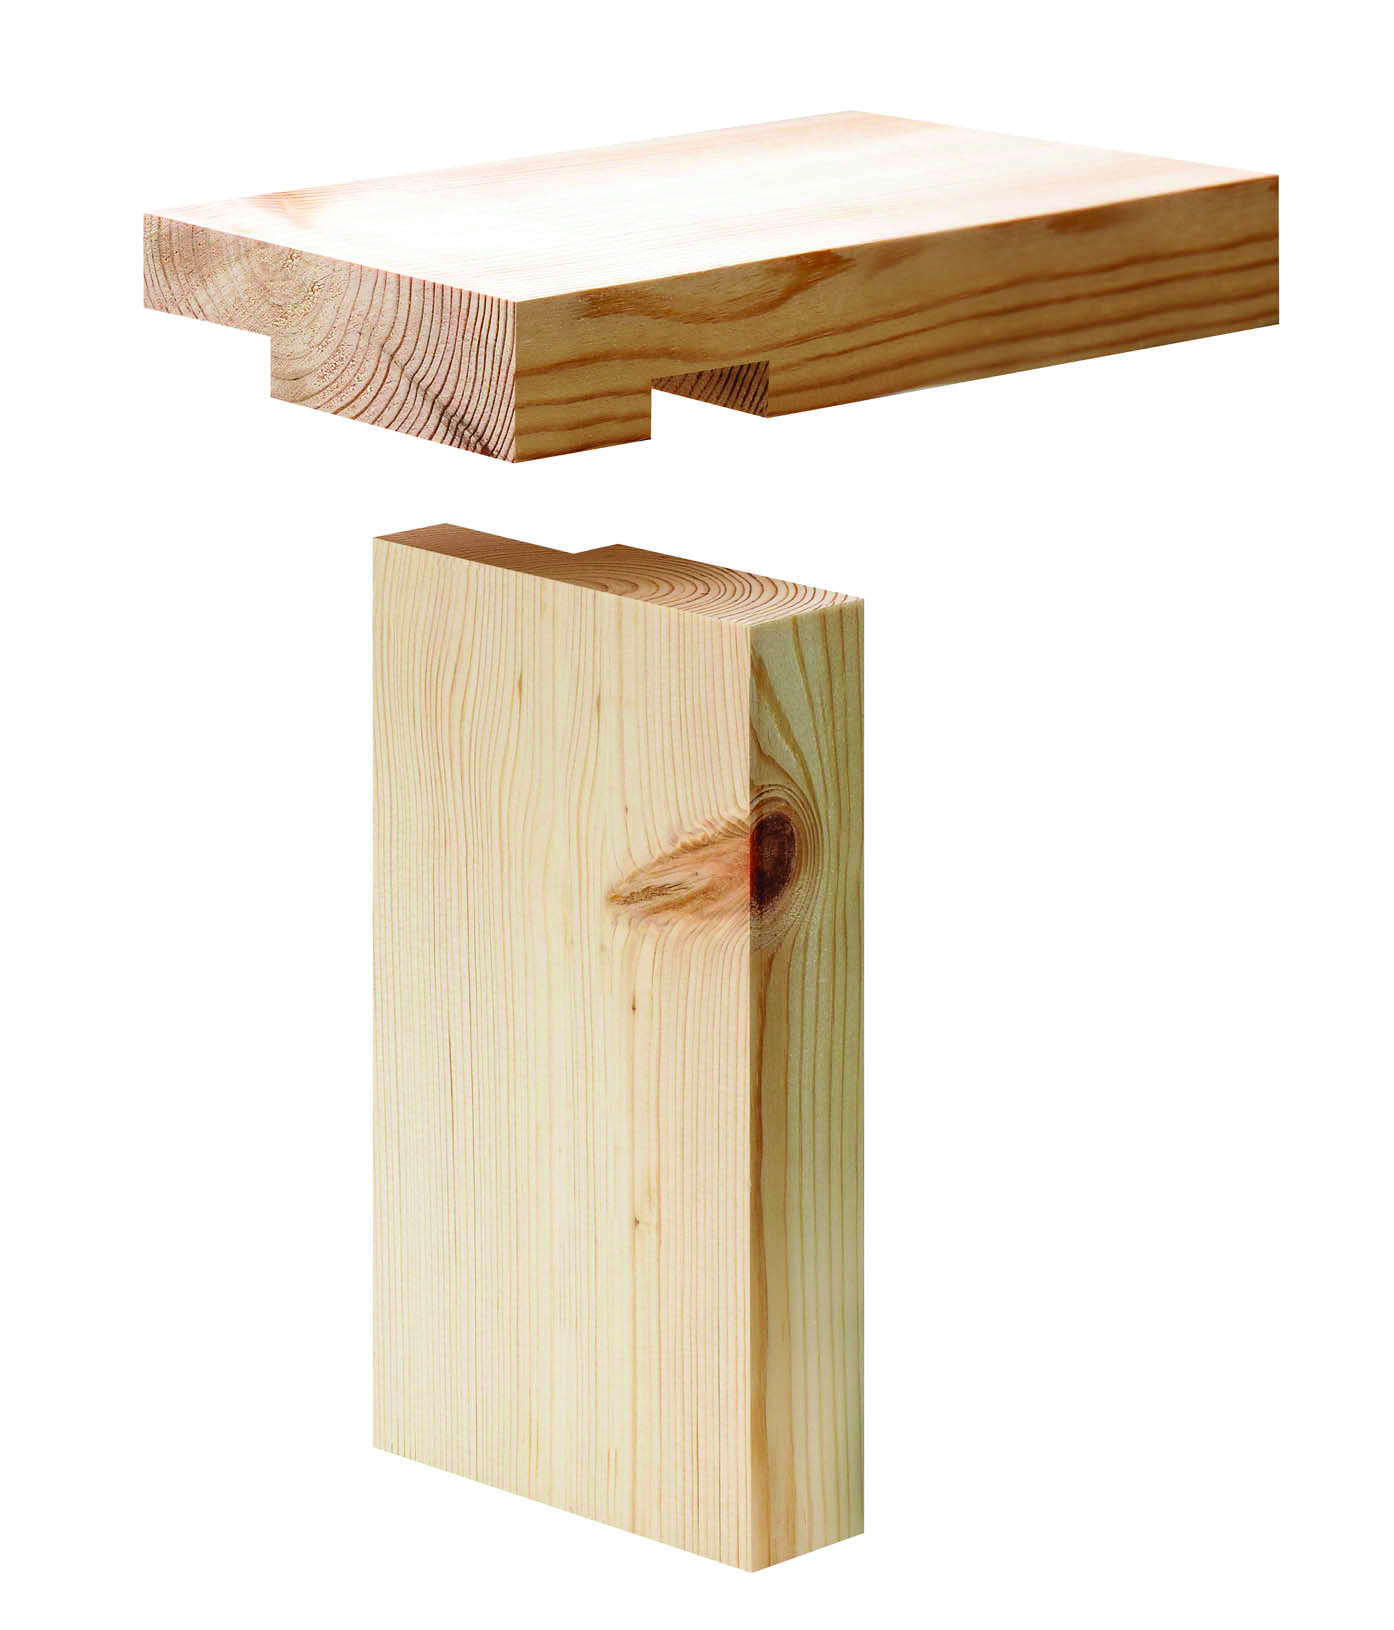 rebated-softwood-door-casing-sets-stoke-timber